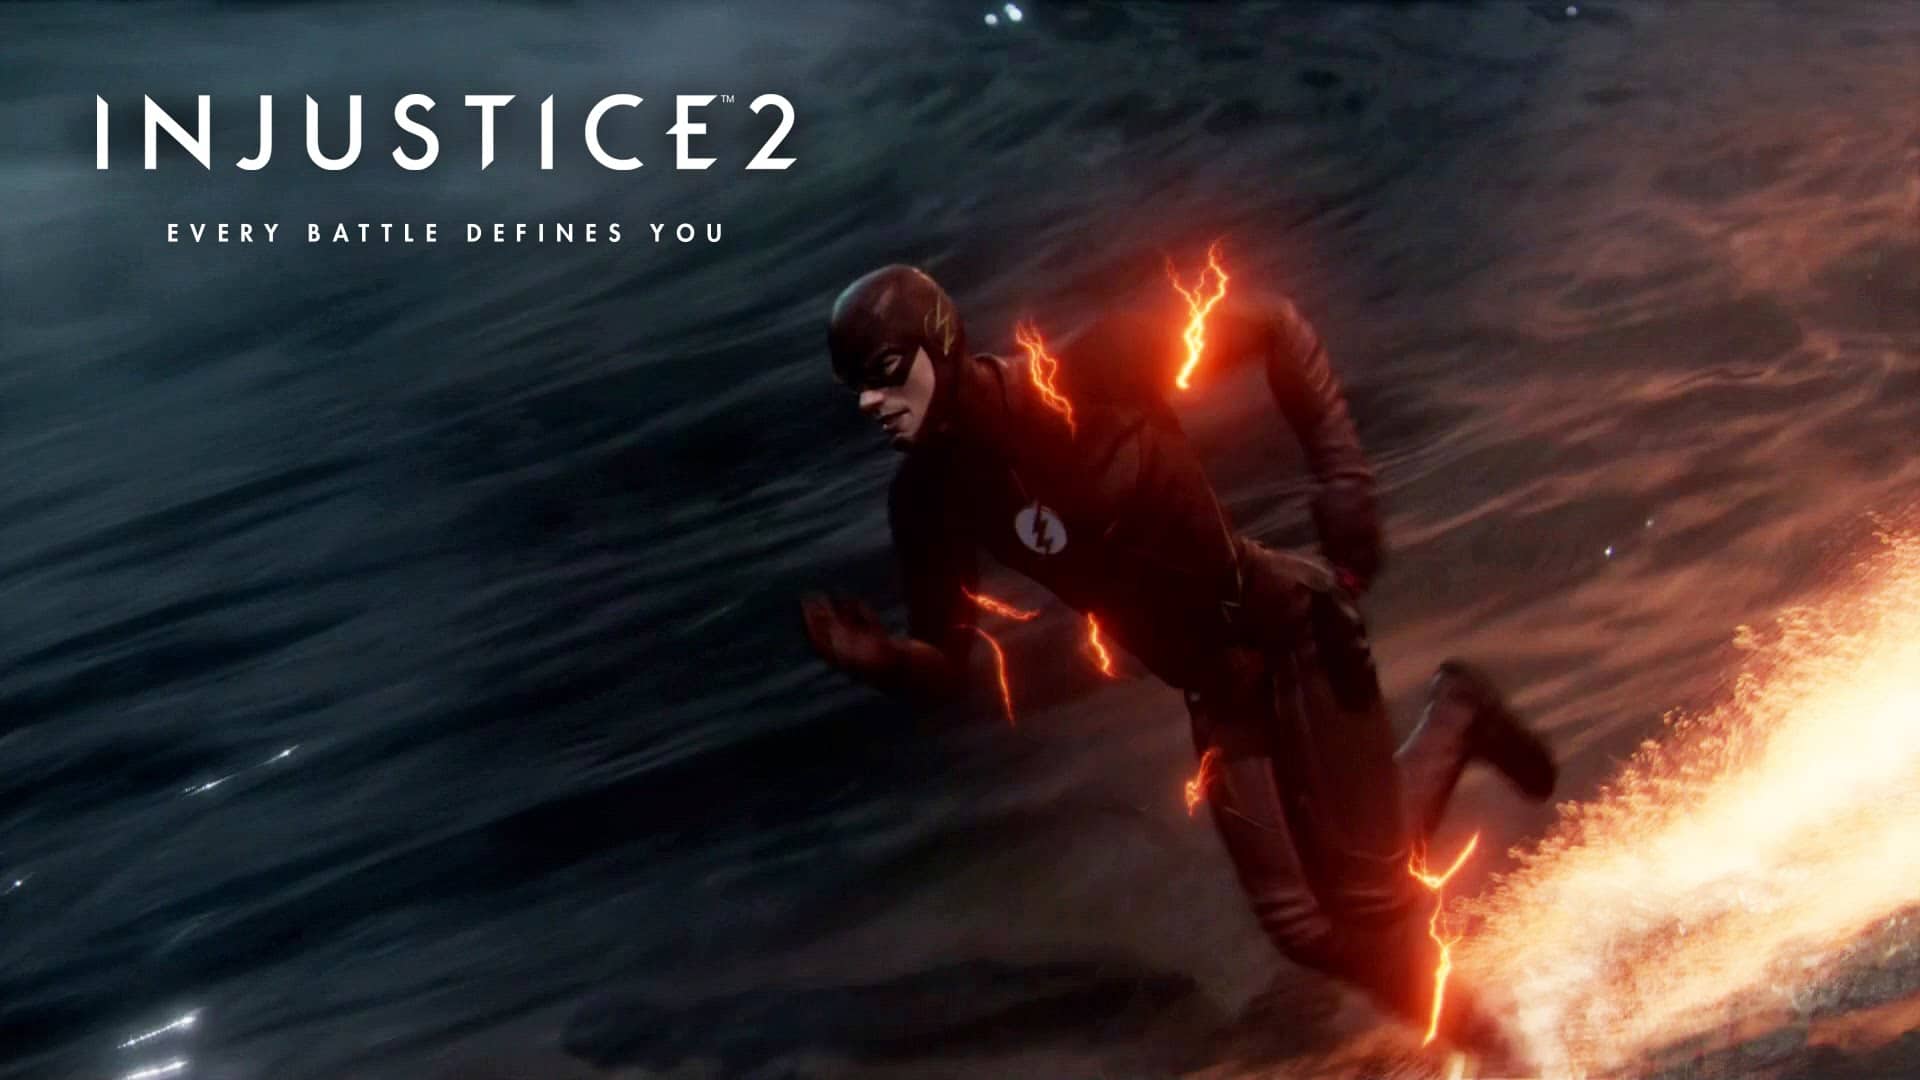 Chequea este trailer de Injustice 2 Ft. The Flash